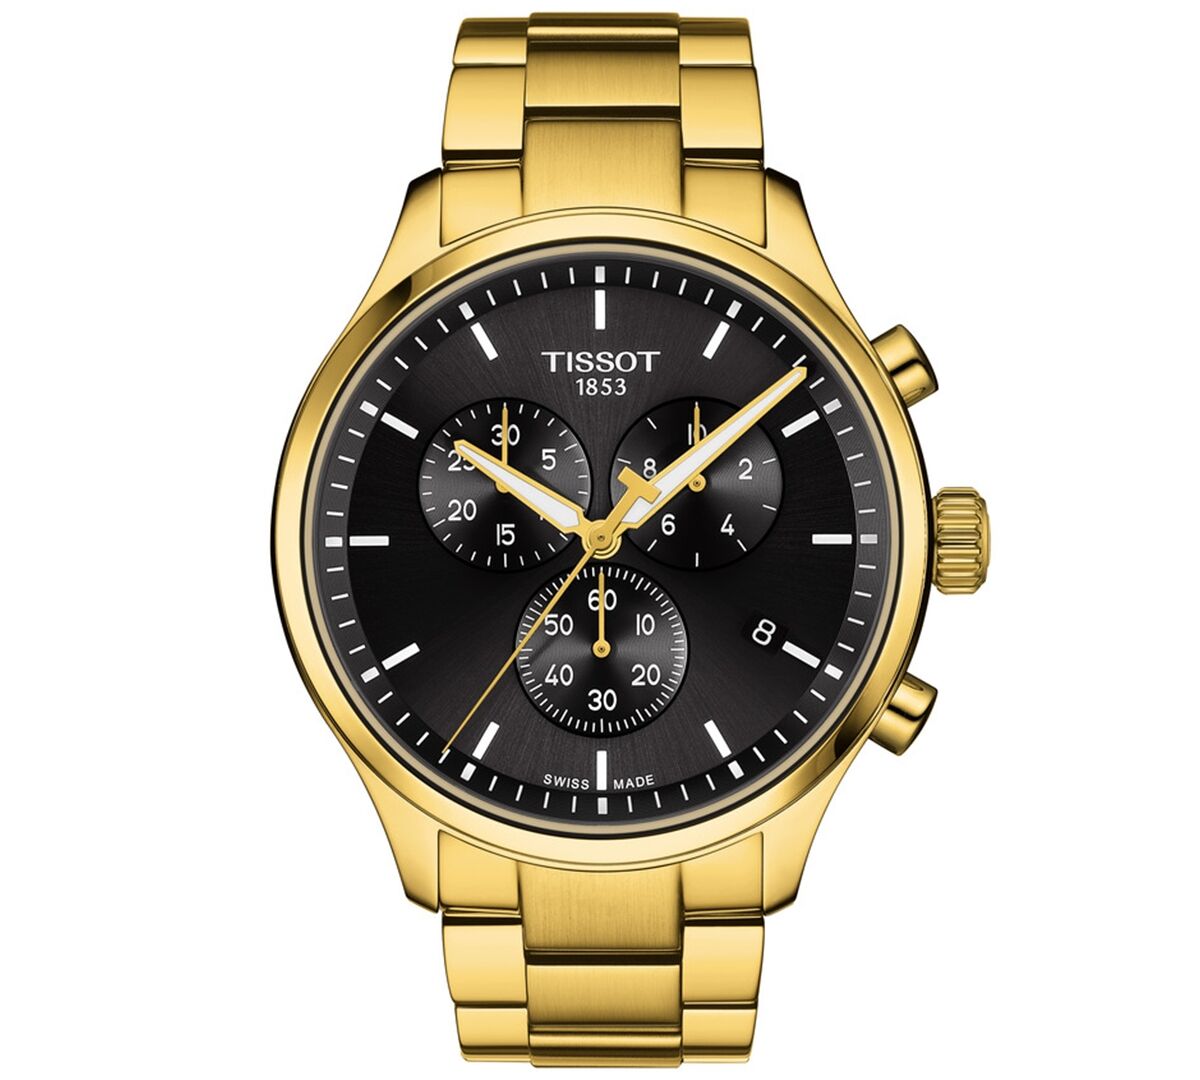 Tissot Men's Swiss Chronograph Chrono Xl Classic Gold-Tone Stainless Steel Bracelet Watch 45mm - Black